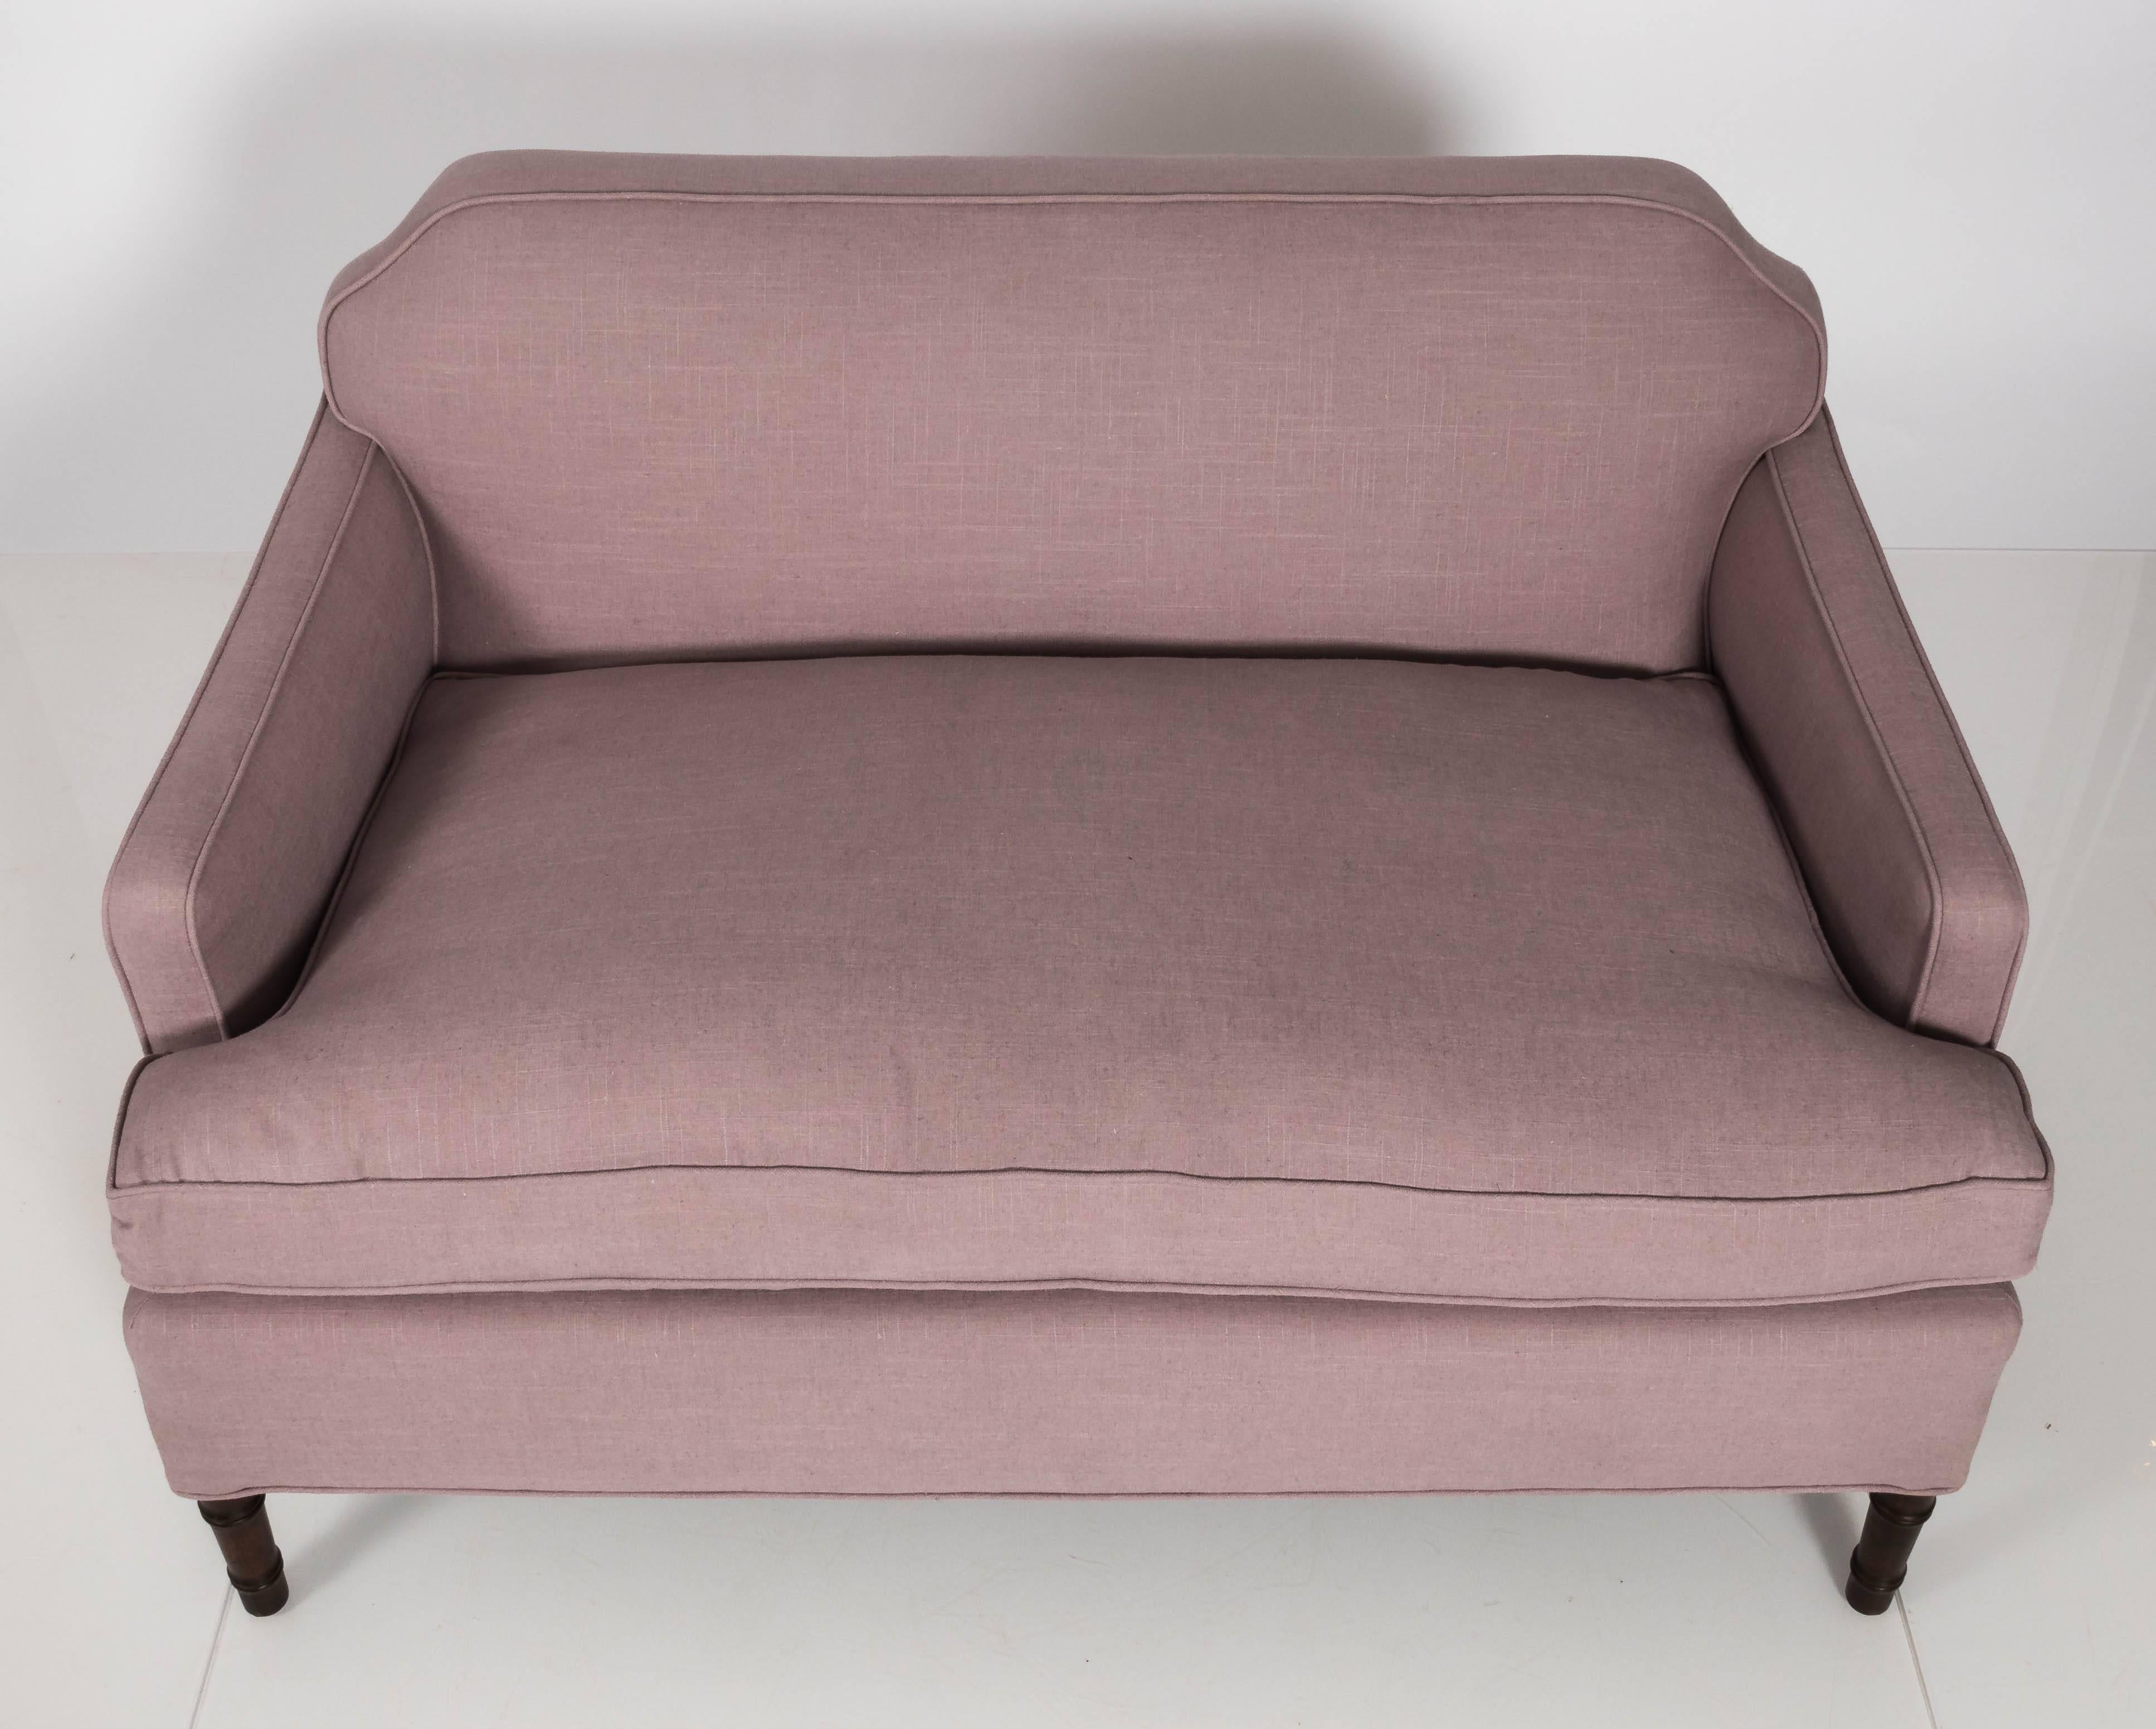 Chinoiserie Bamboo Leg Newly Upholstered Small Sofa